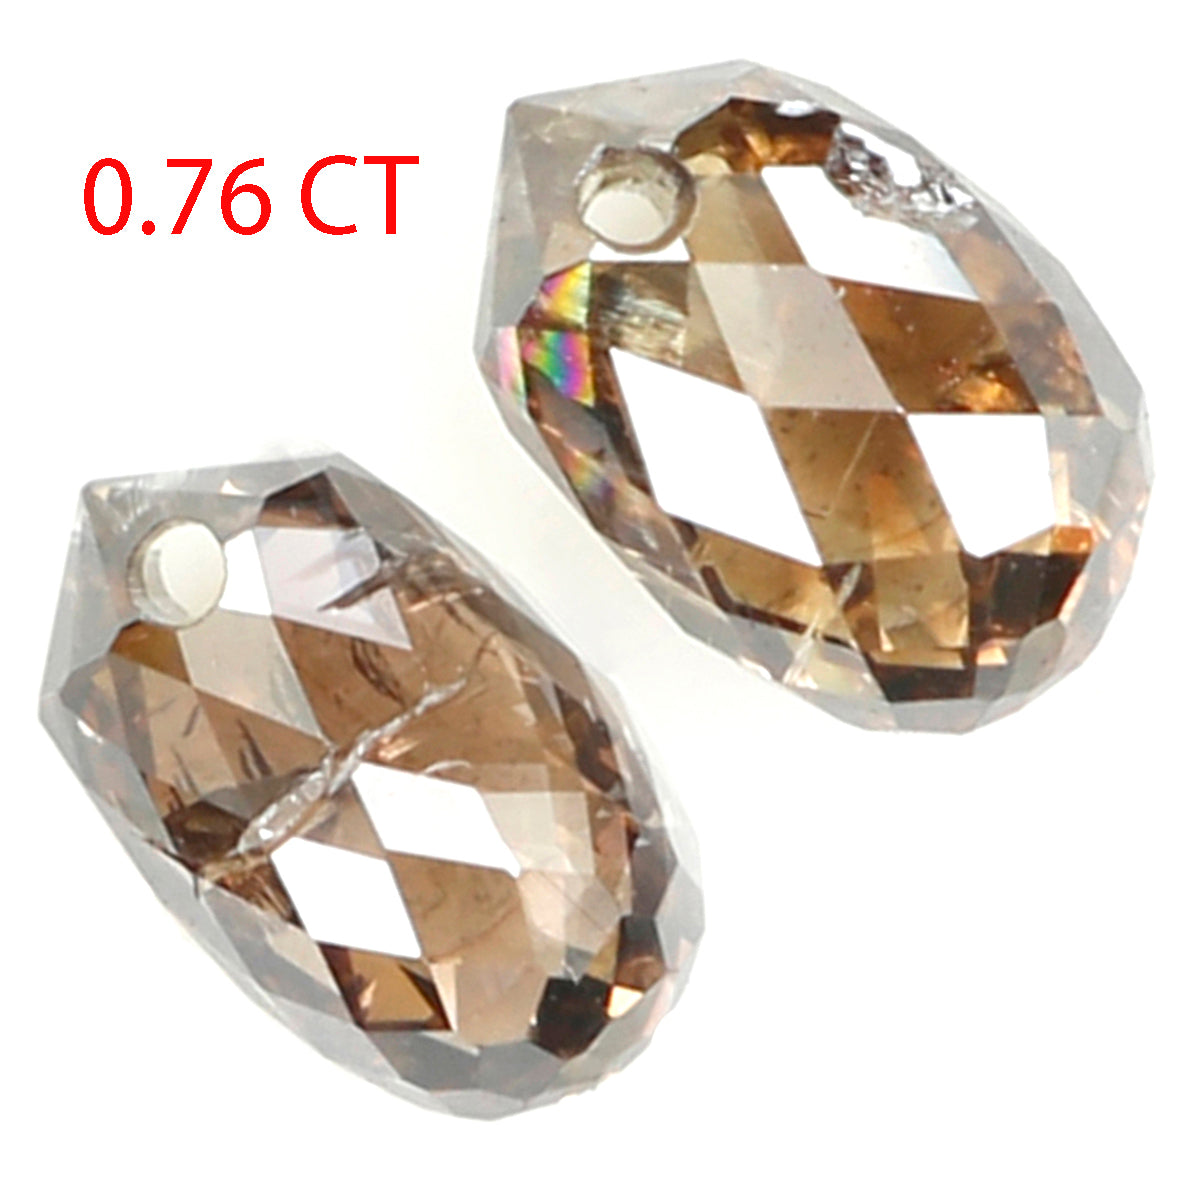 0.76 Ct Natural Loose Diamond, Brown Black Diamond, briolette Diamond, Drop Cut Diamond, Rose Cut Real Rustic Diamond, KDL9480